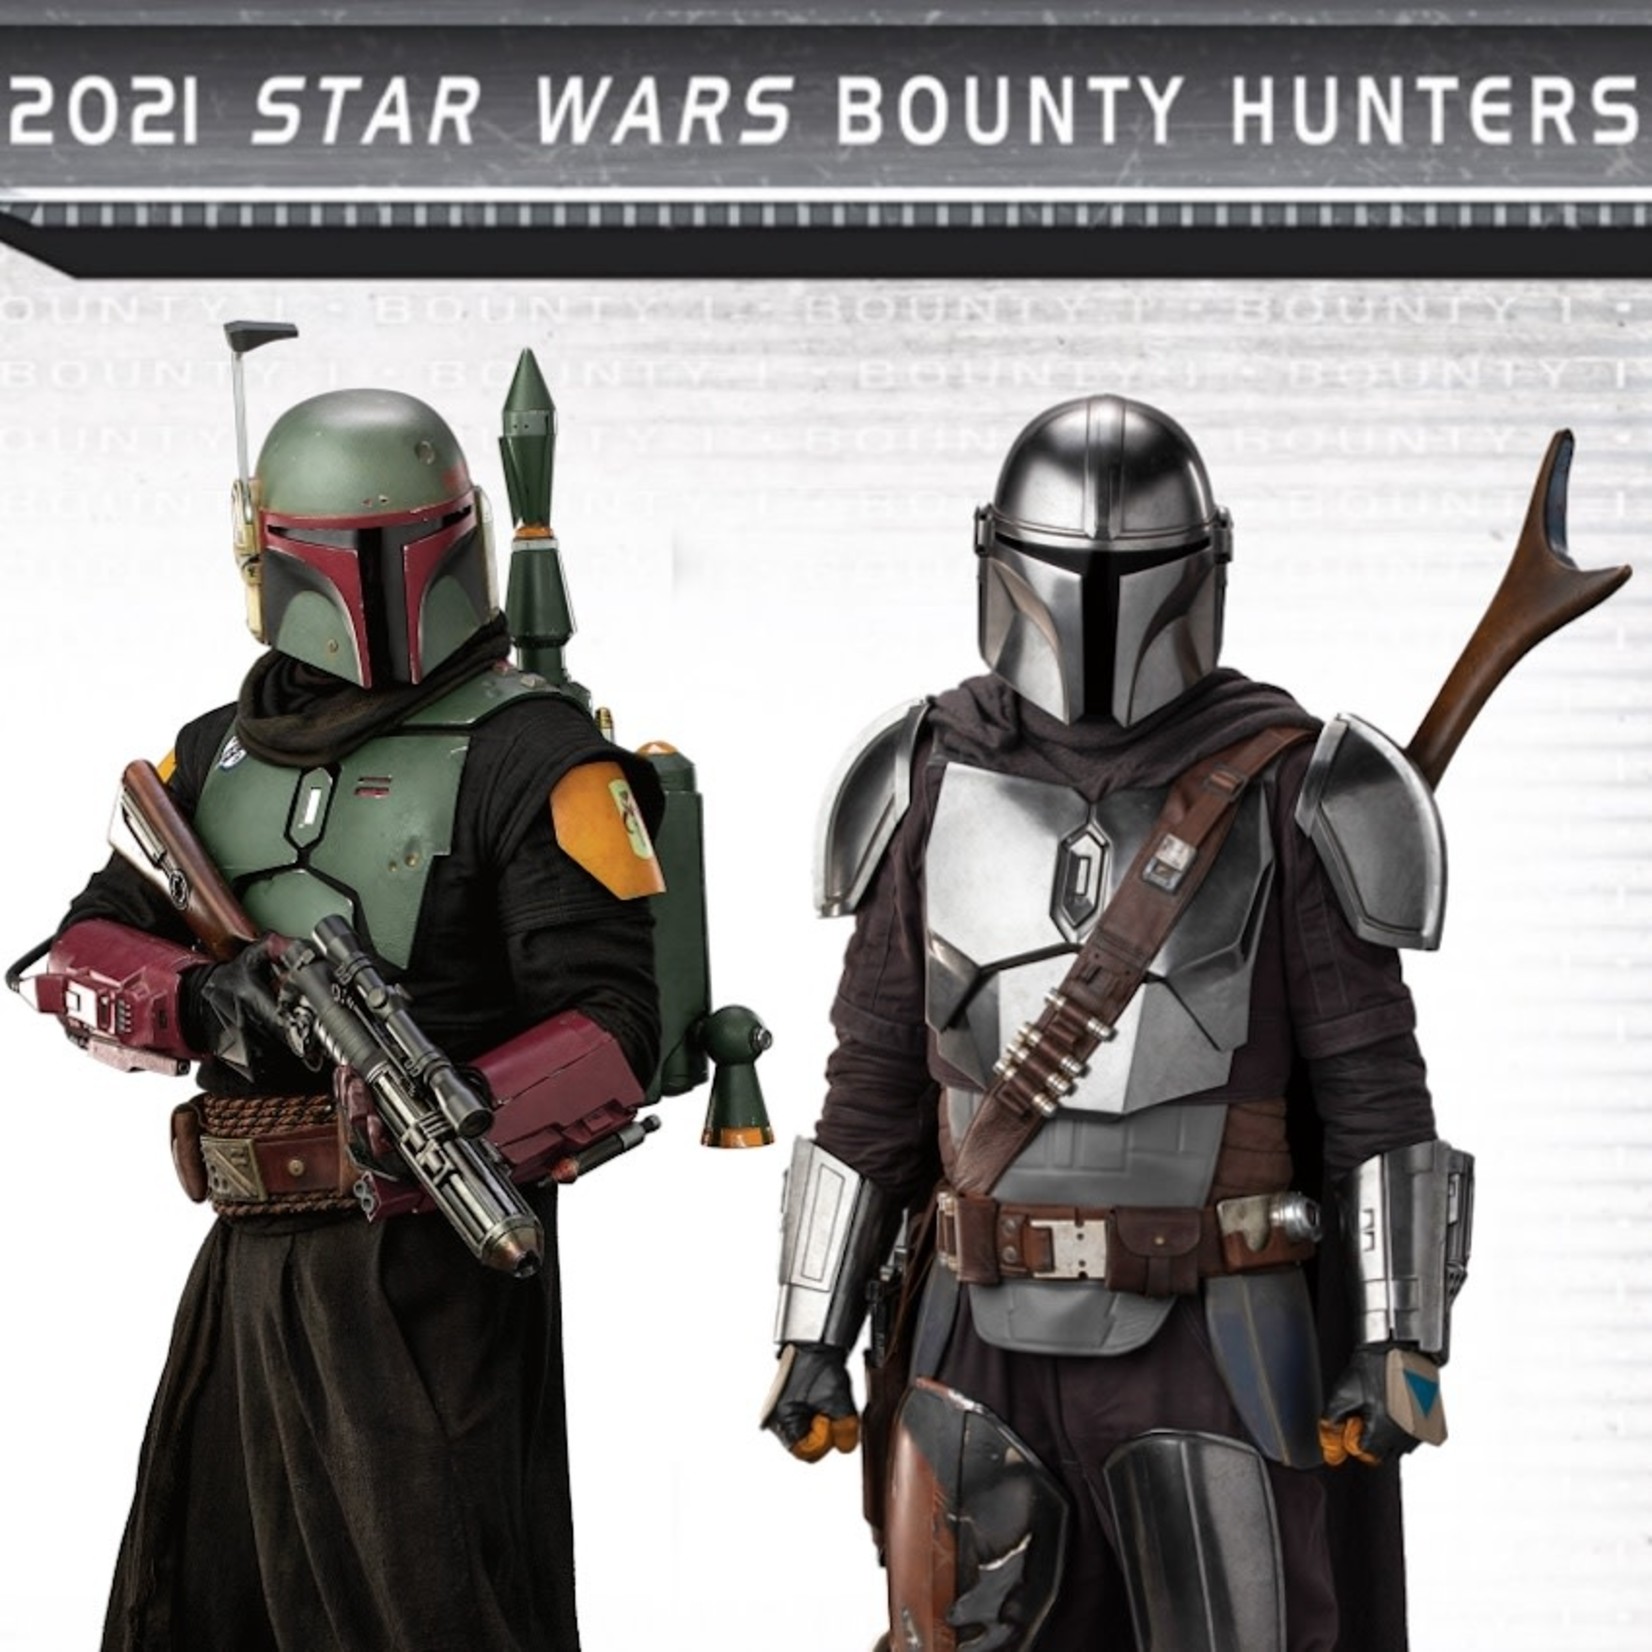 Topps 2021 Star Wars Bounty Hunters TC